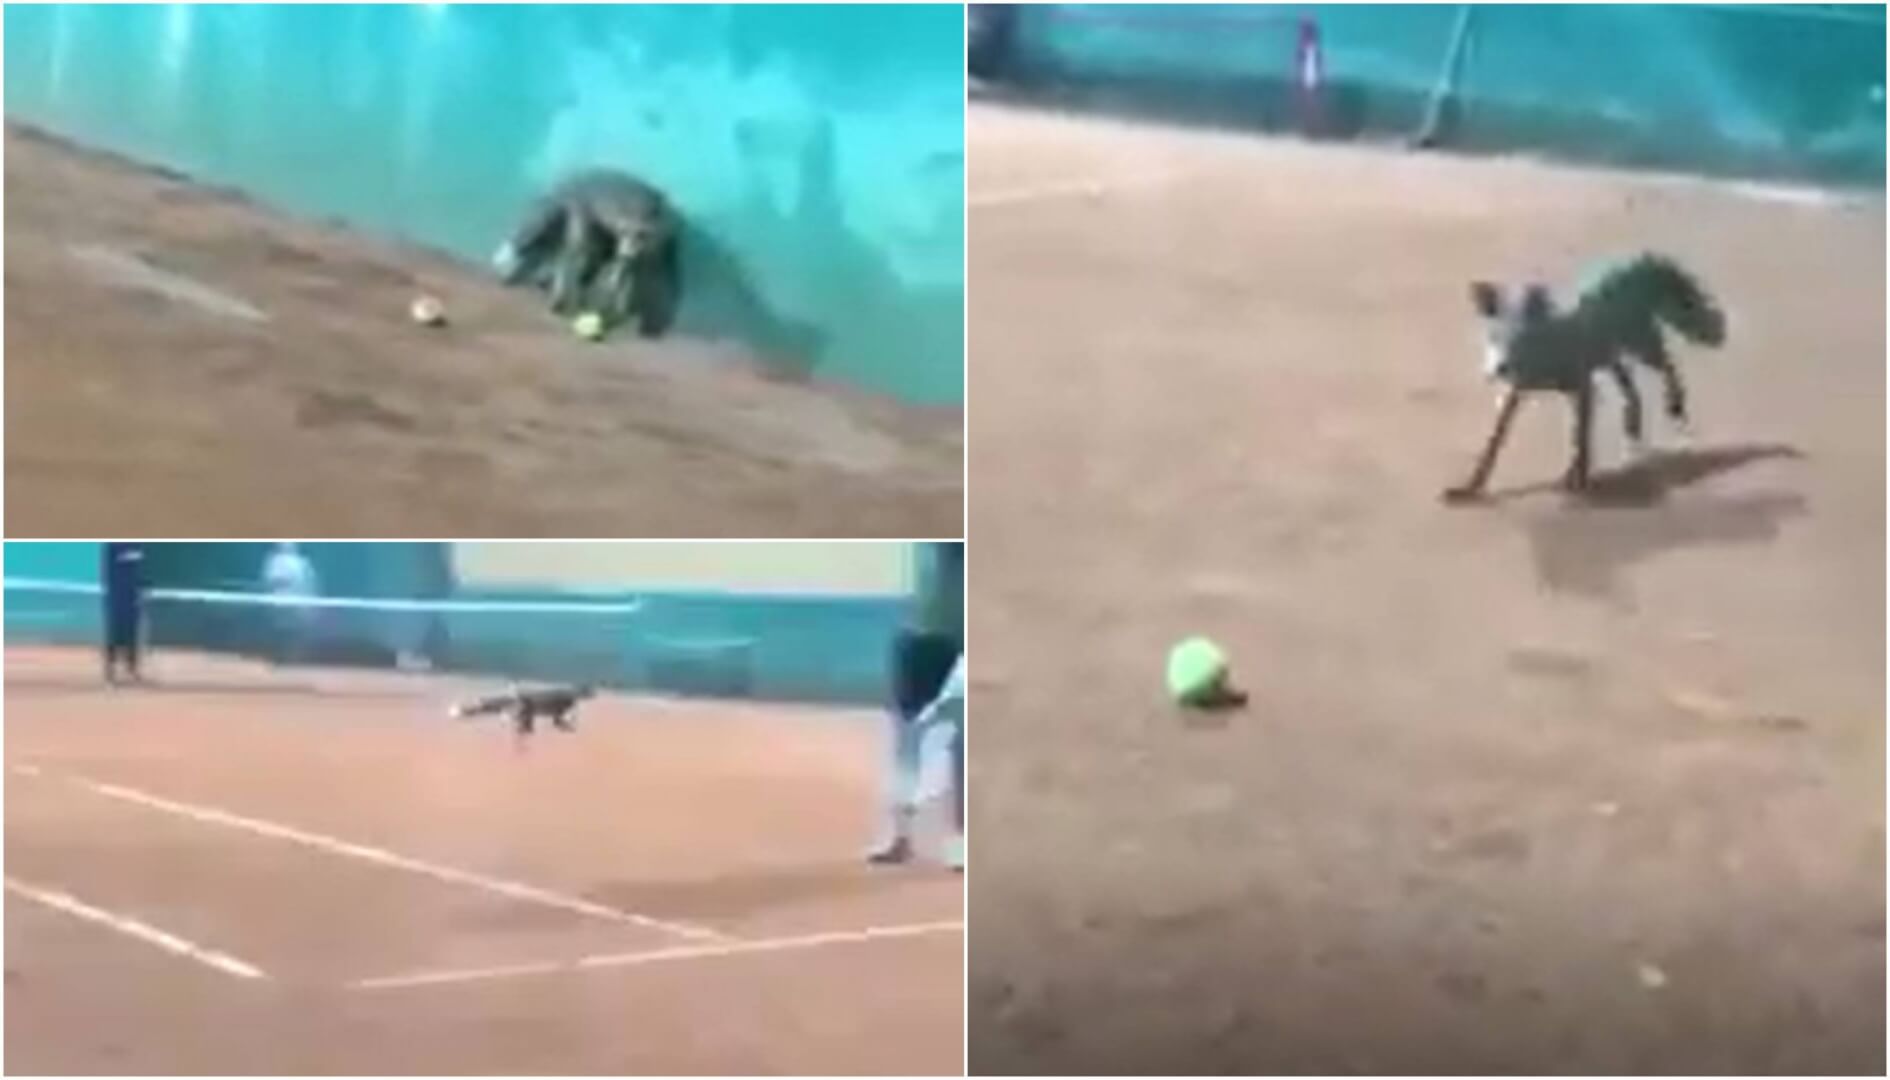 Hλιούπολη: Μία Μικρή Αλεπού Εμφανίστηκε Στο Tennis Club Και «Έπαιζε» Με Τους Αθλητές (VIDEO)